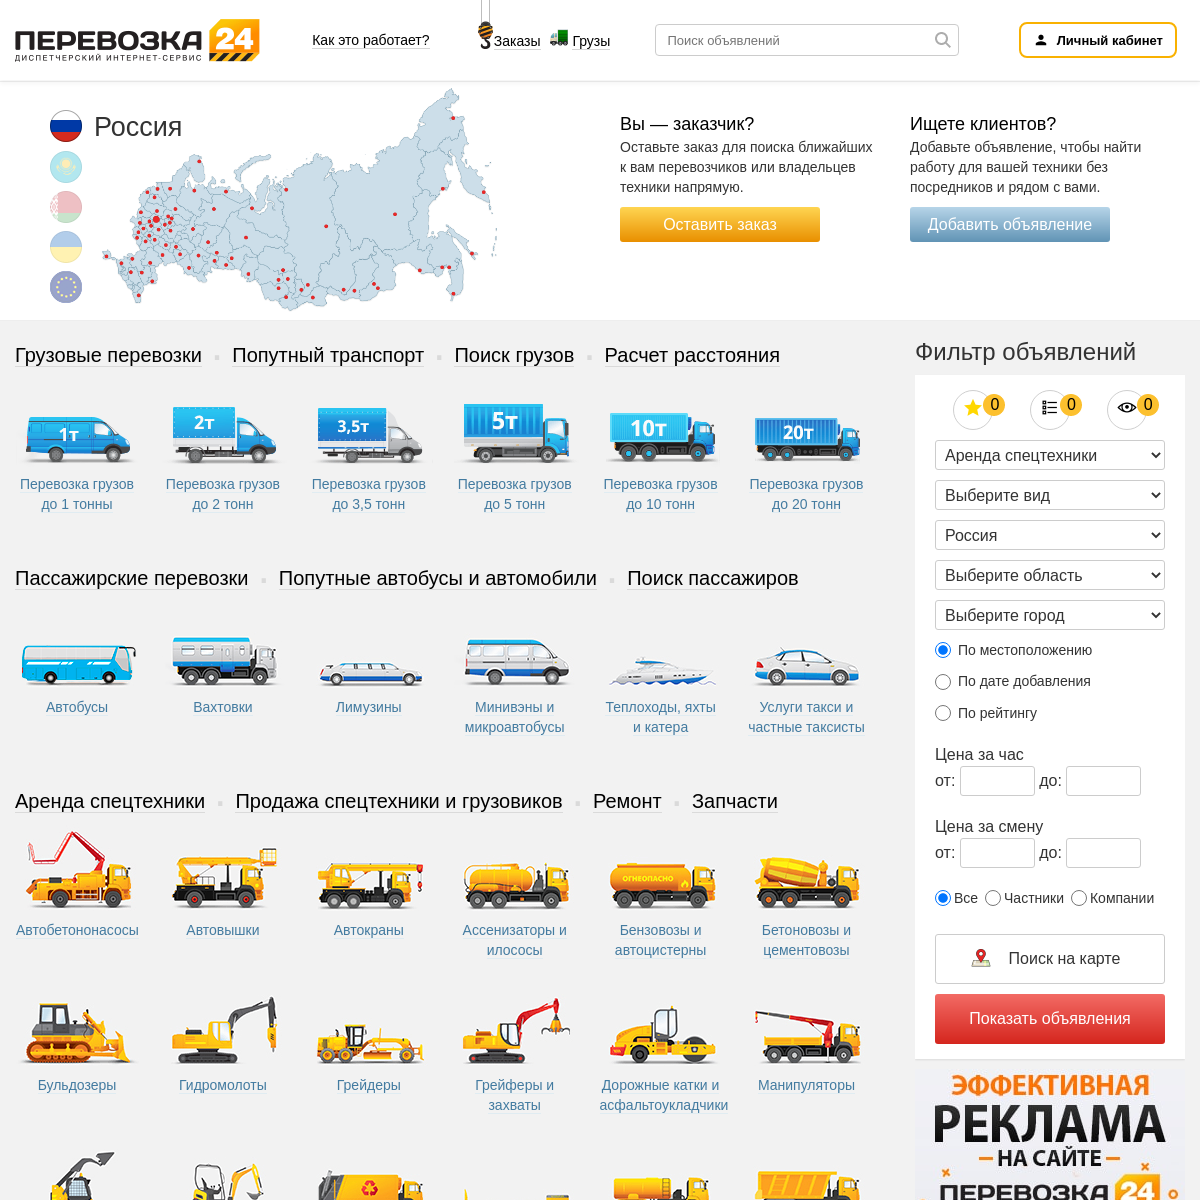 A complete backup of perevozka24.ru